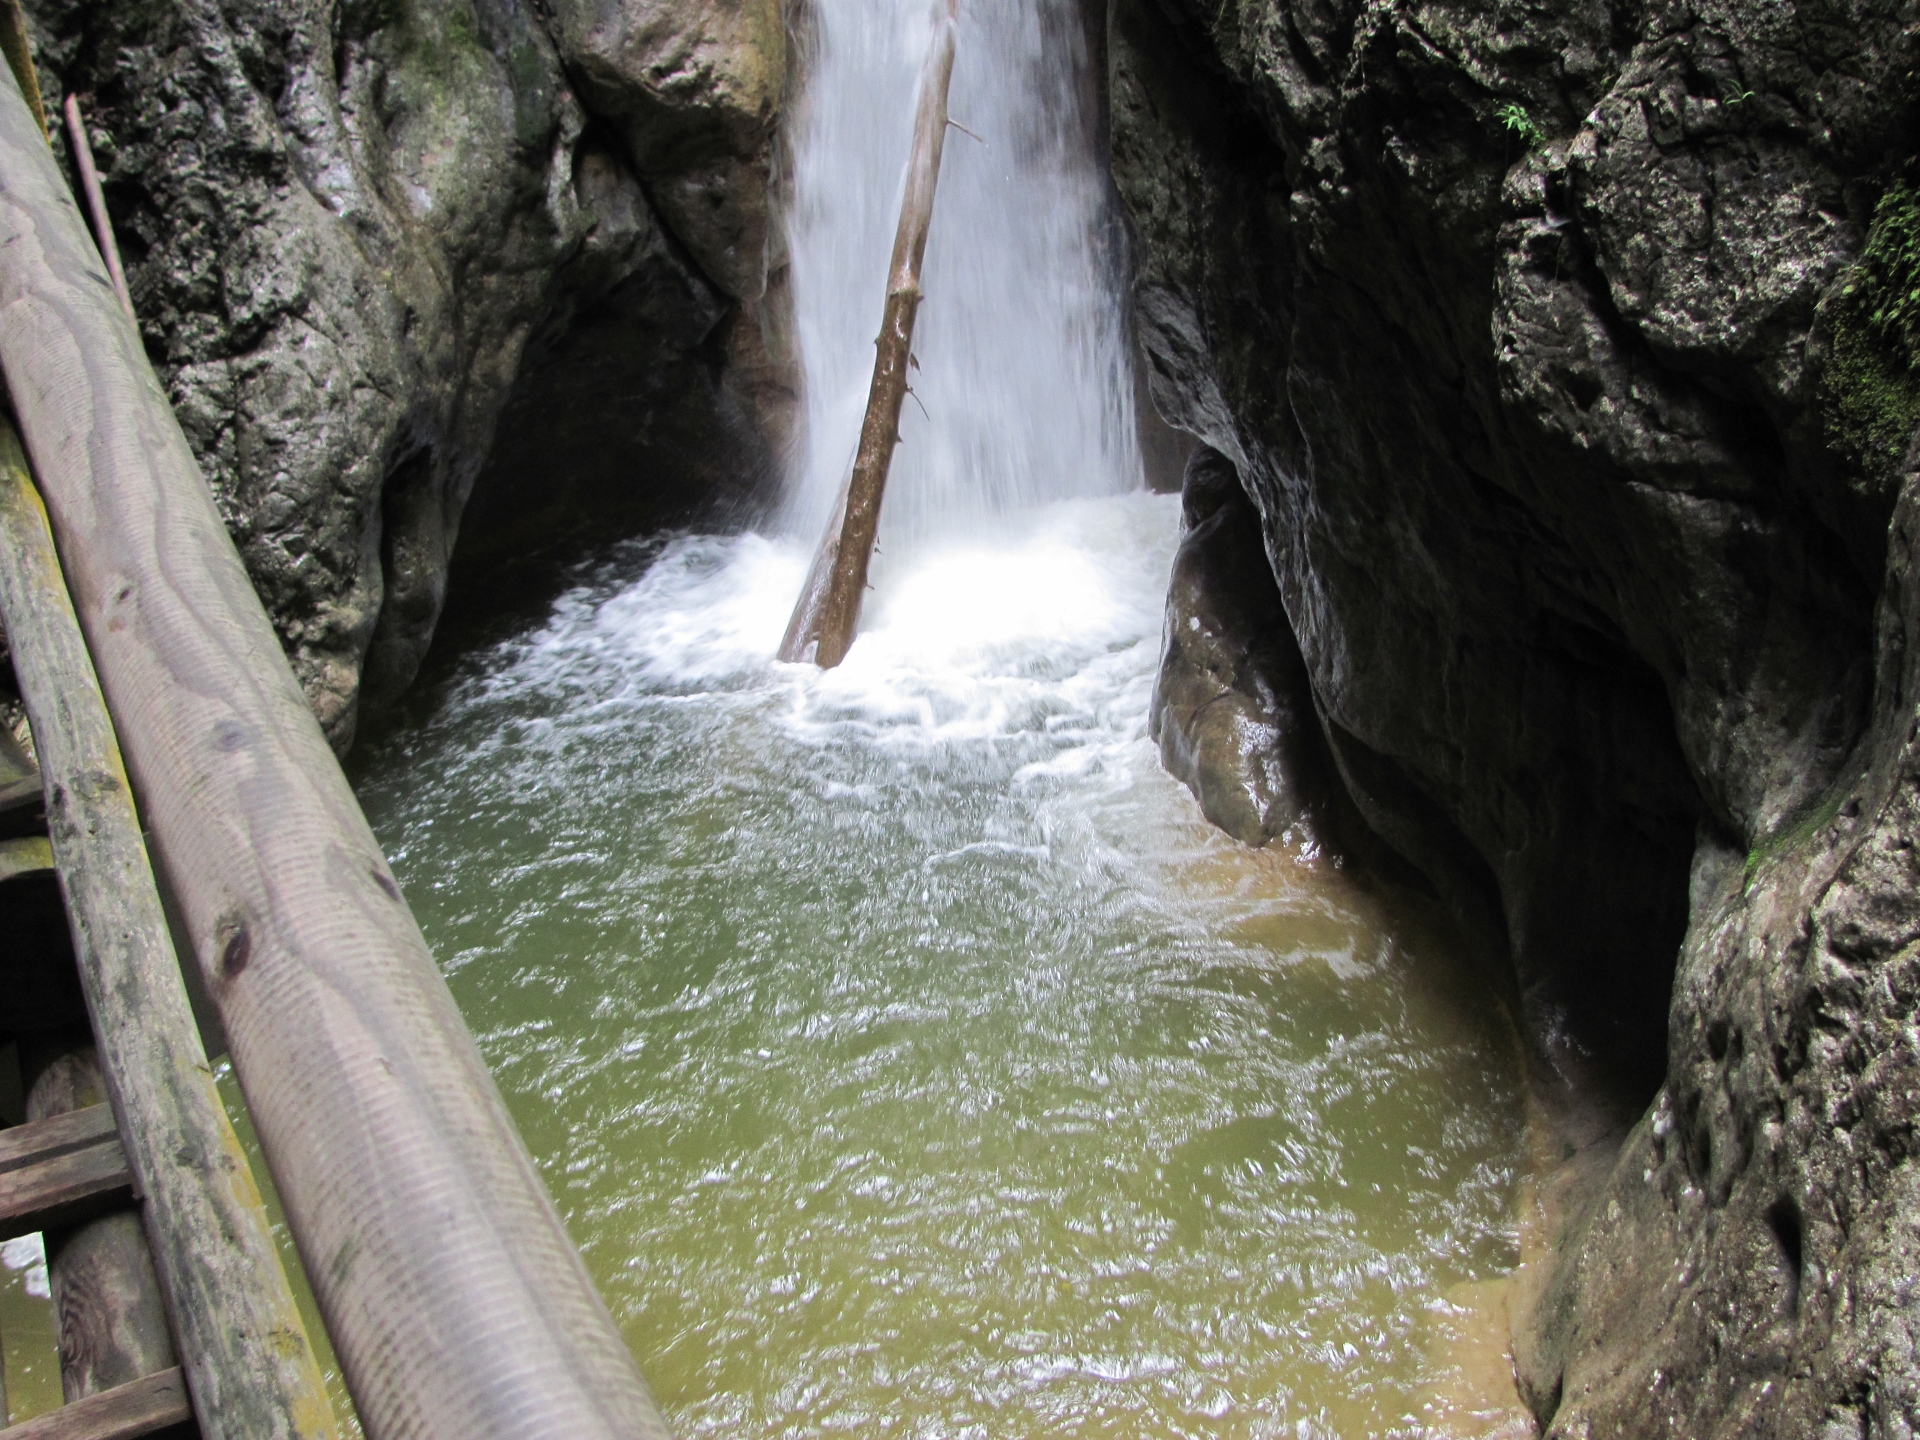 Awesome waterfalls